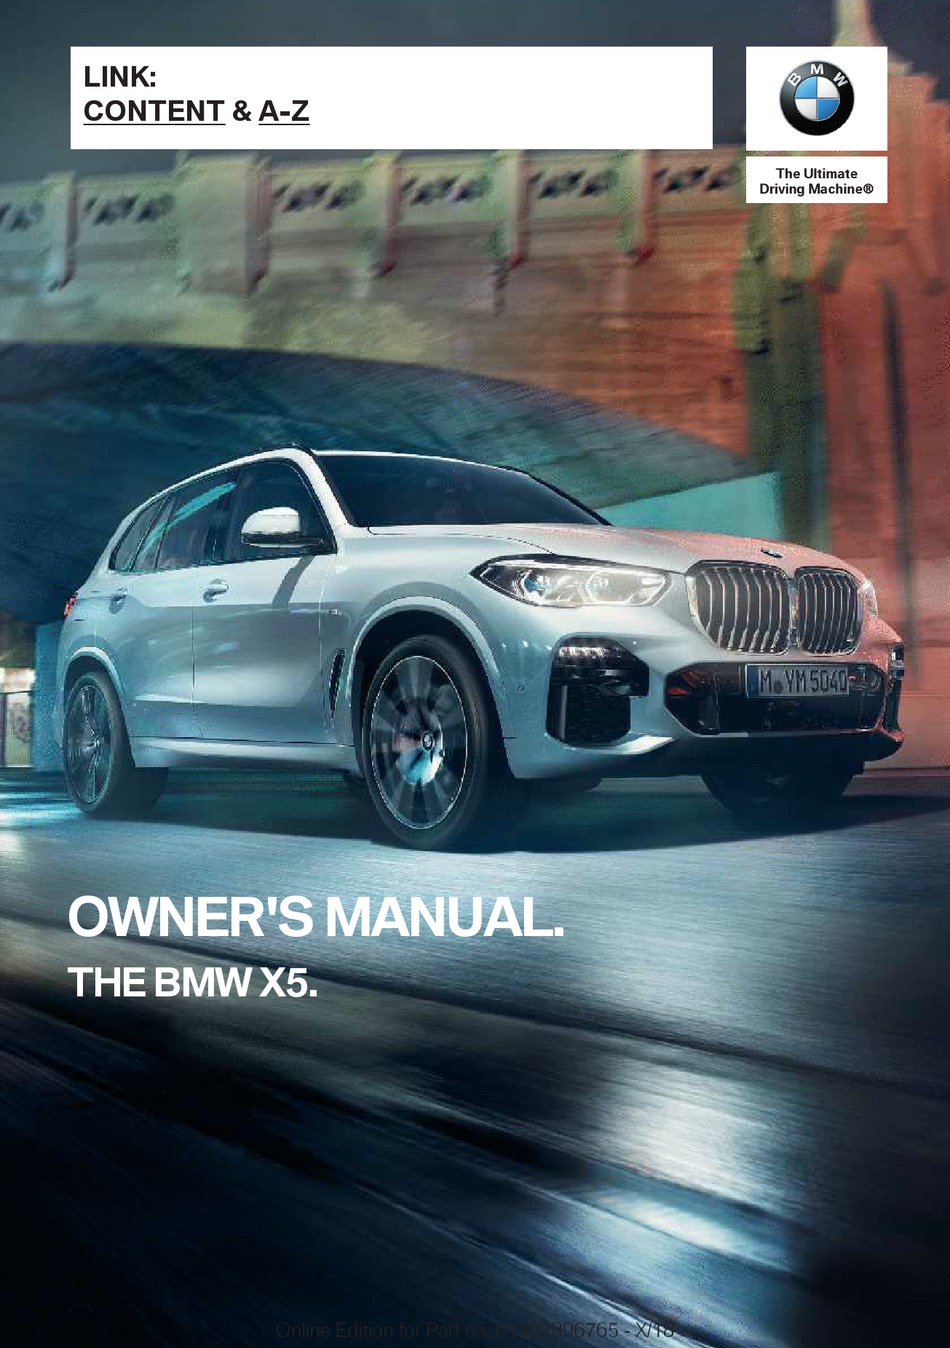 BMW X5 AUTOMOBILE OWNER'S MANUAL ManualsLib